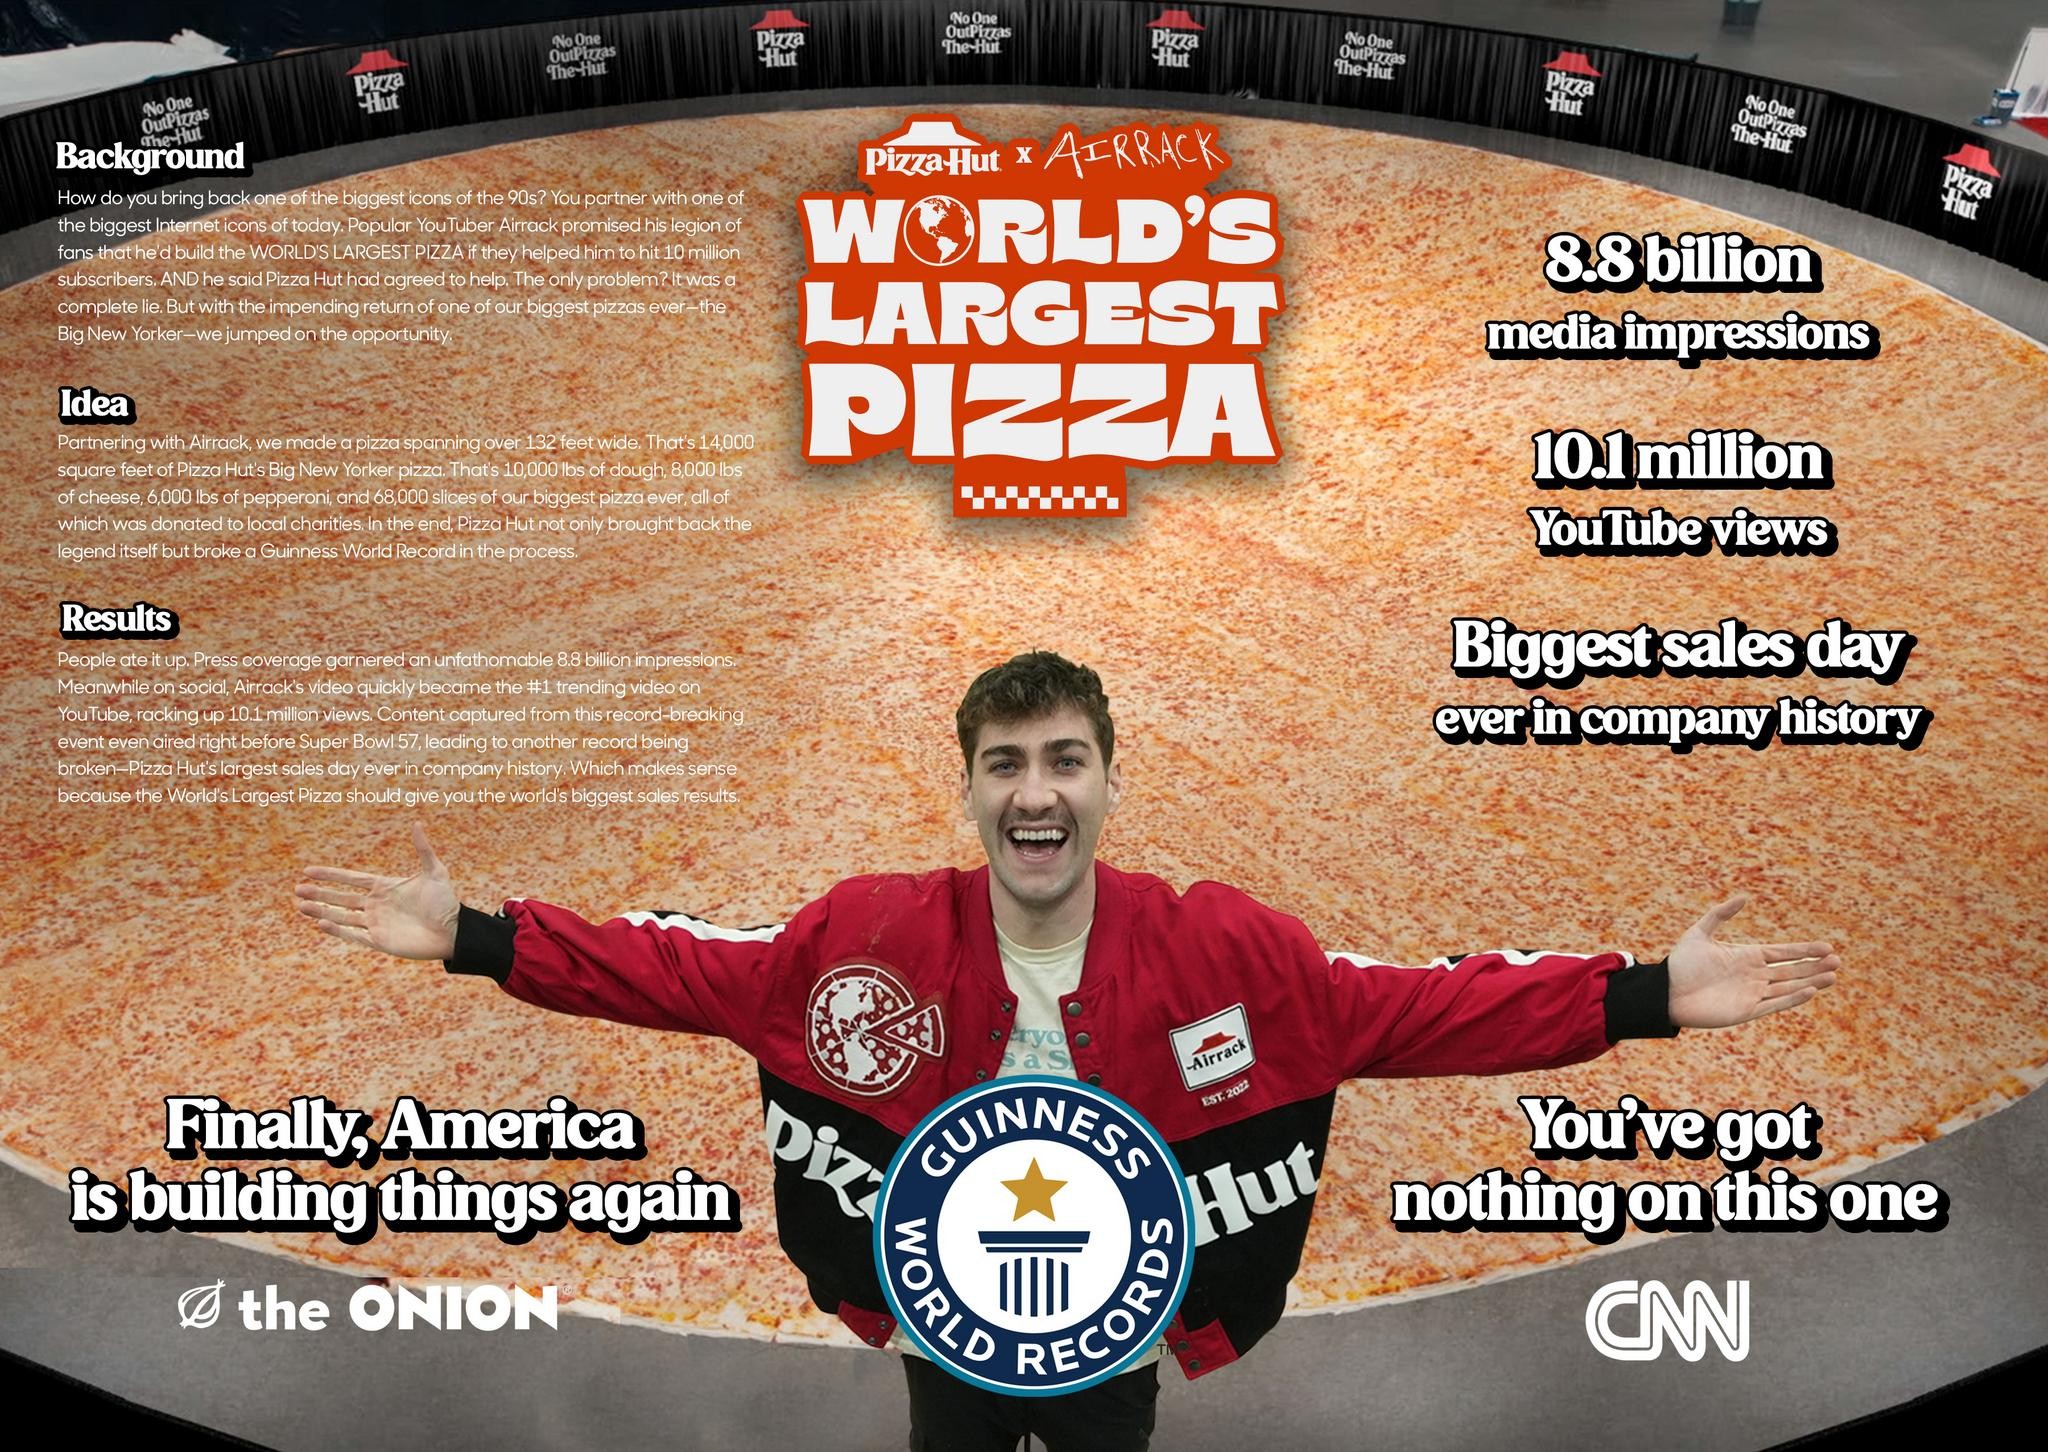 Pizza Hut: World's Largest Pizza